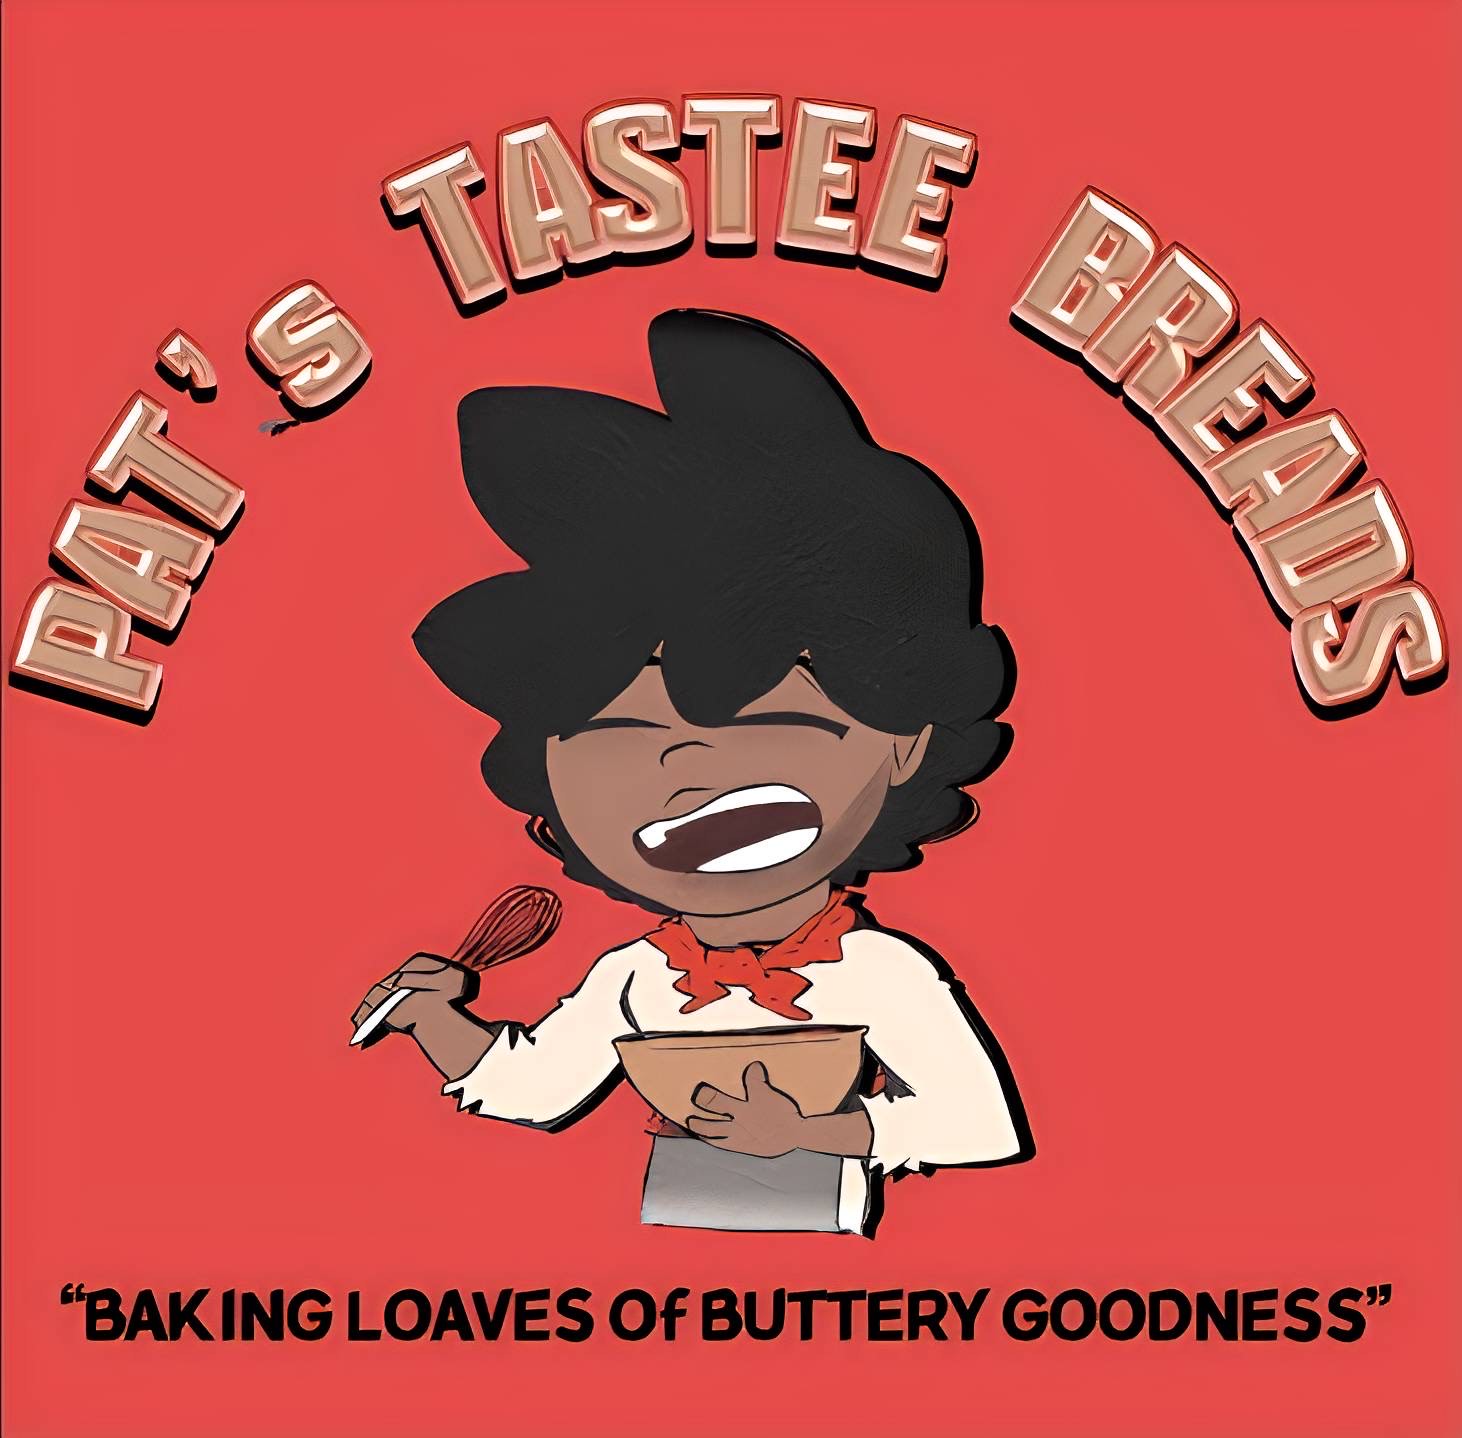 Pat's Tastee Breads